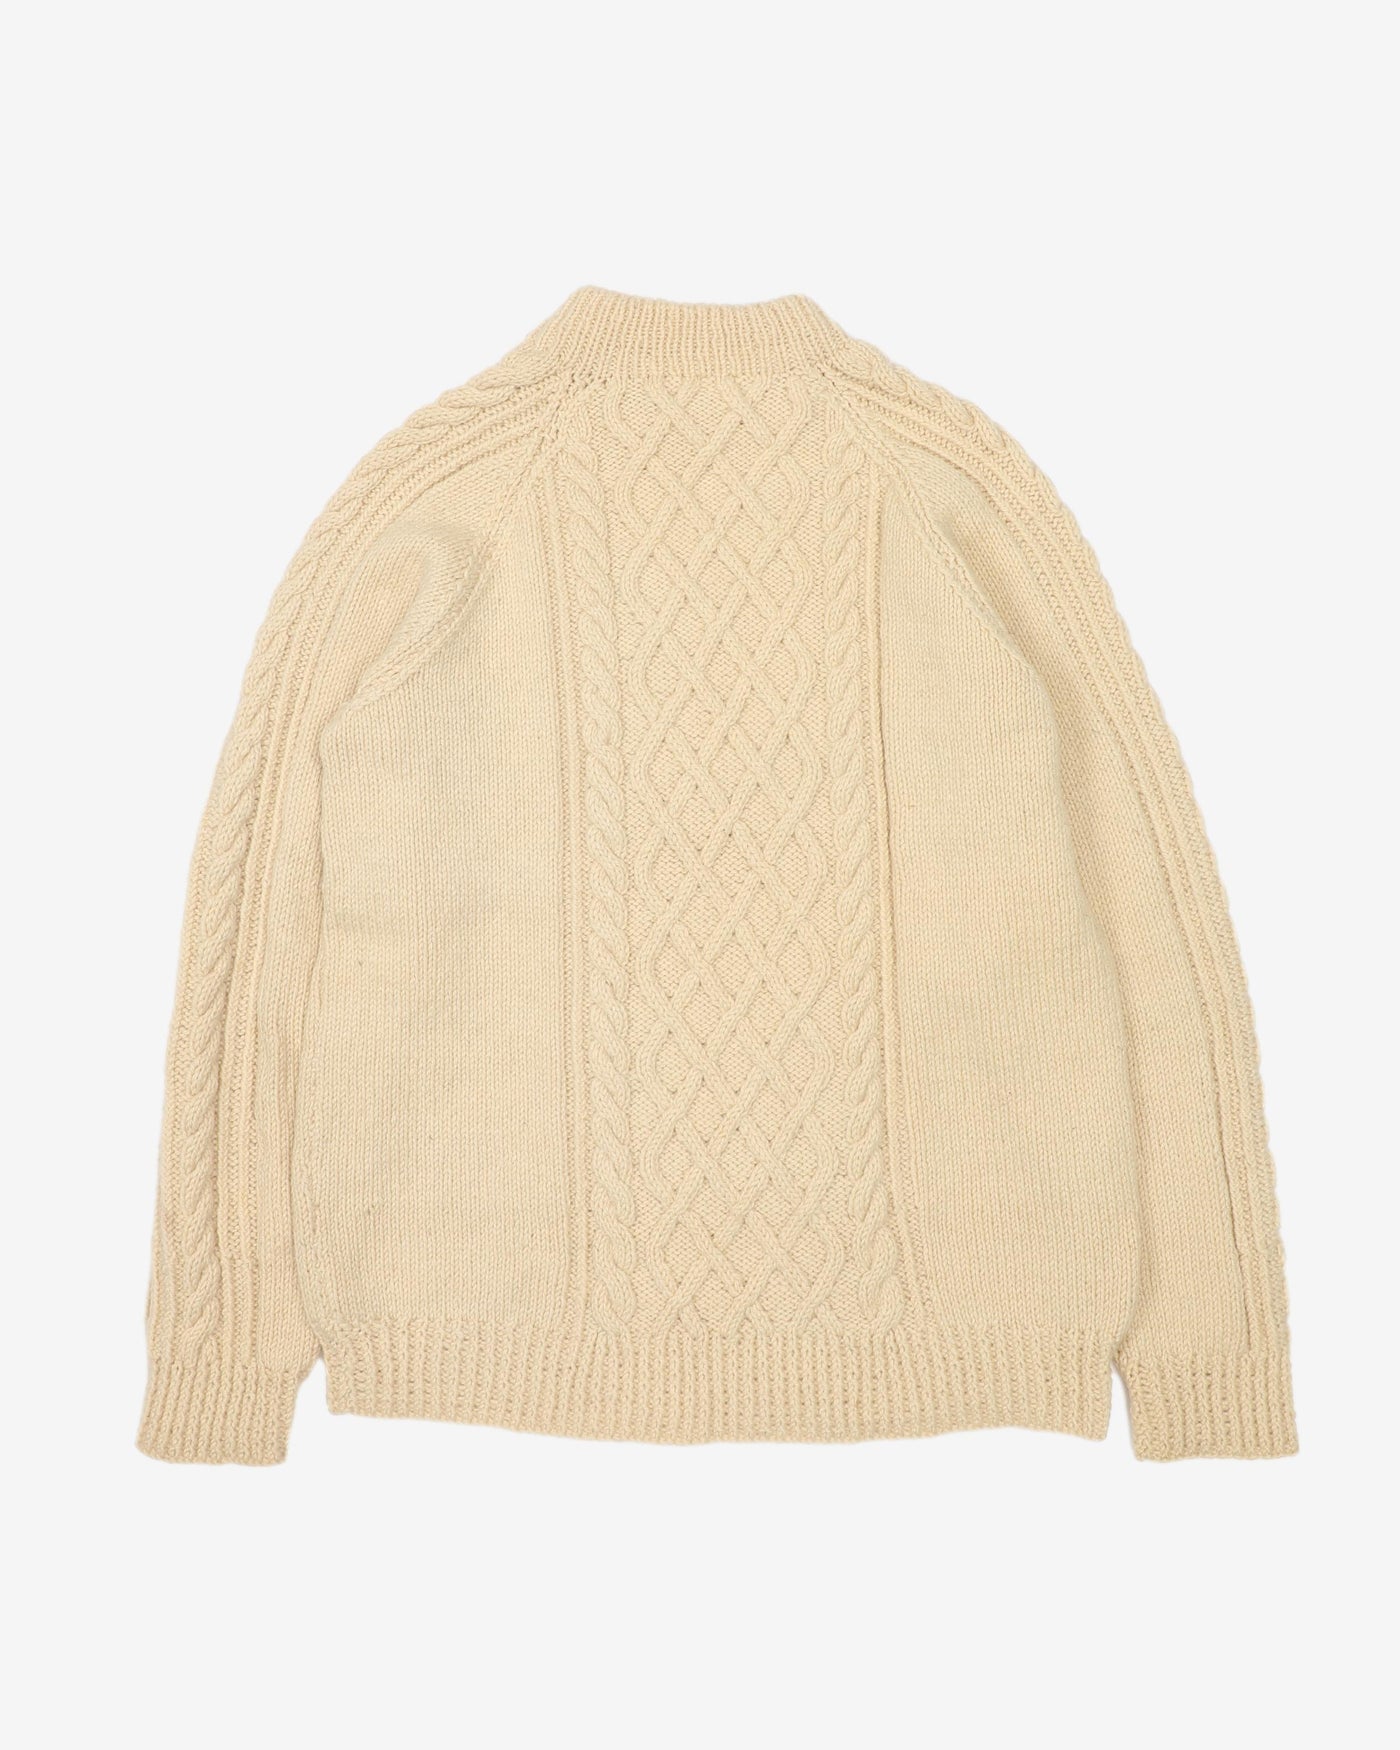 Aran Patterned Hand Knitted Wool Jumper - M / L